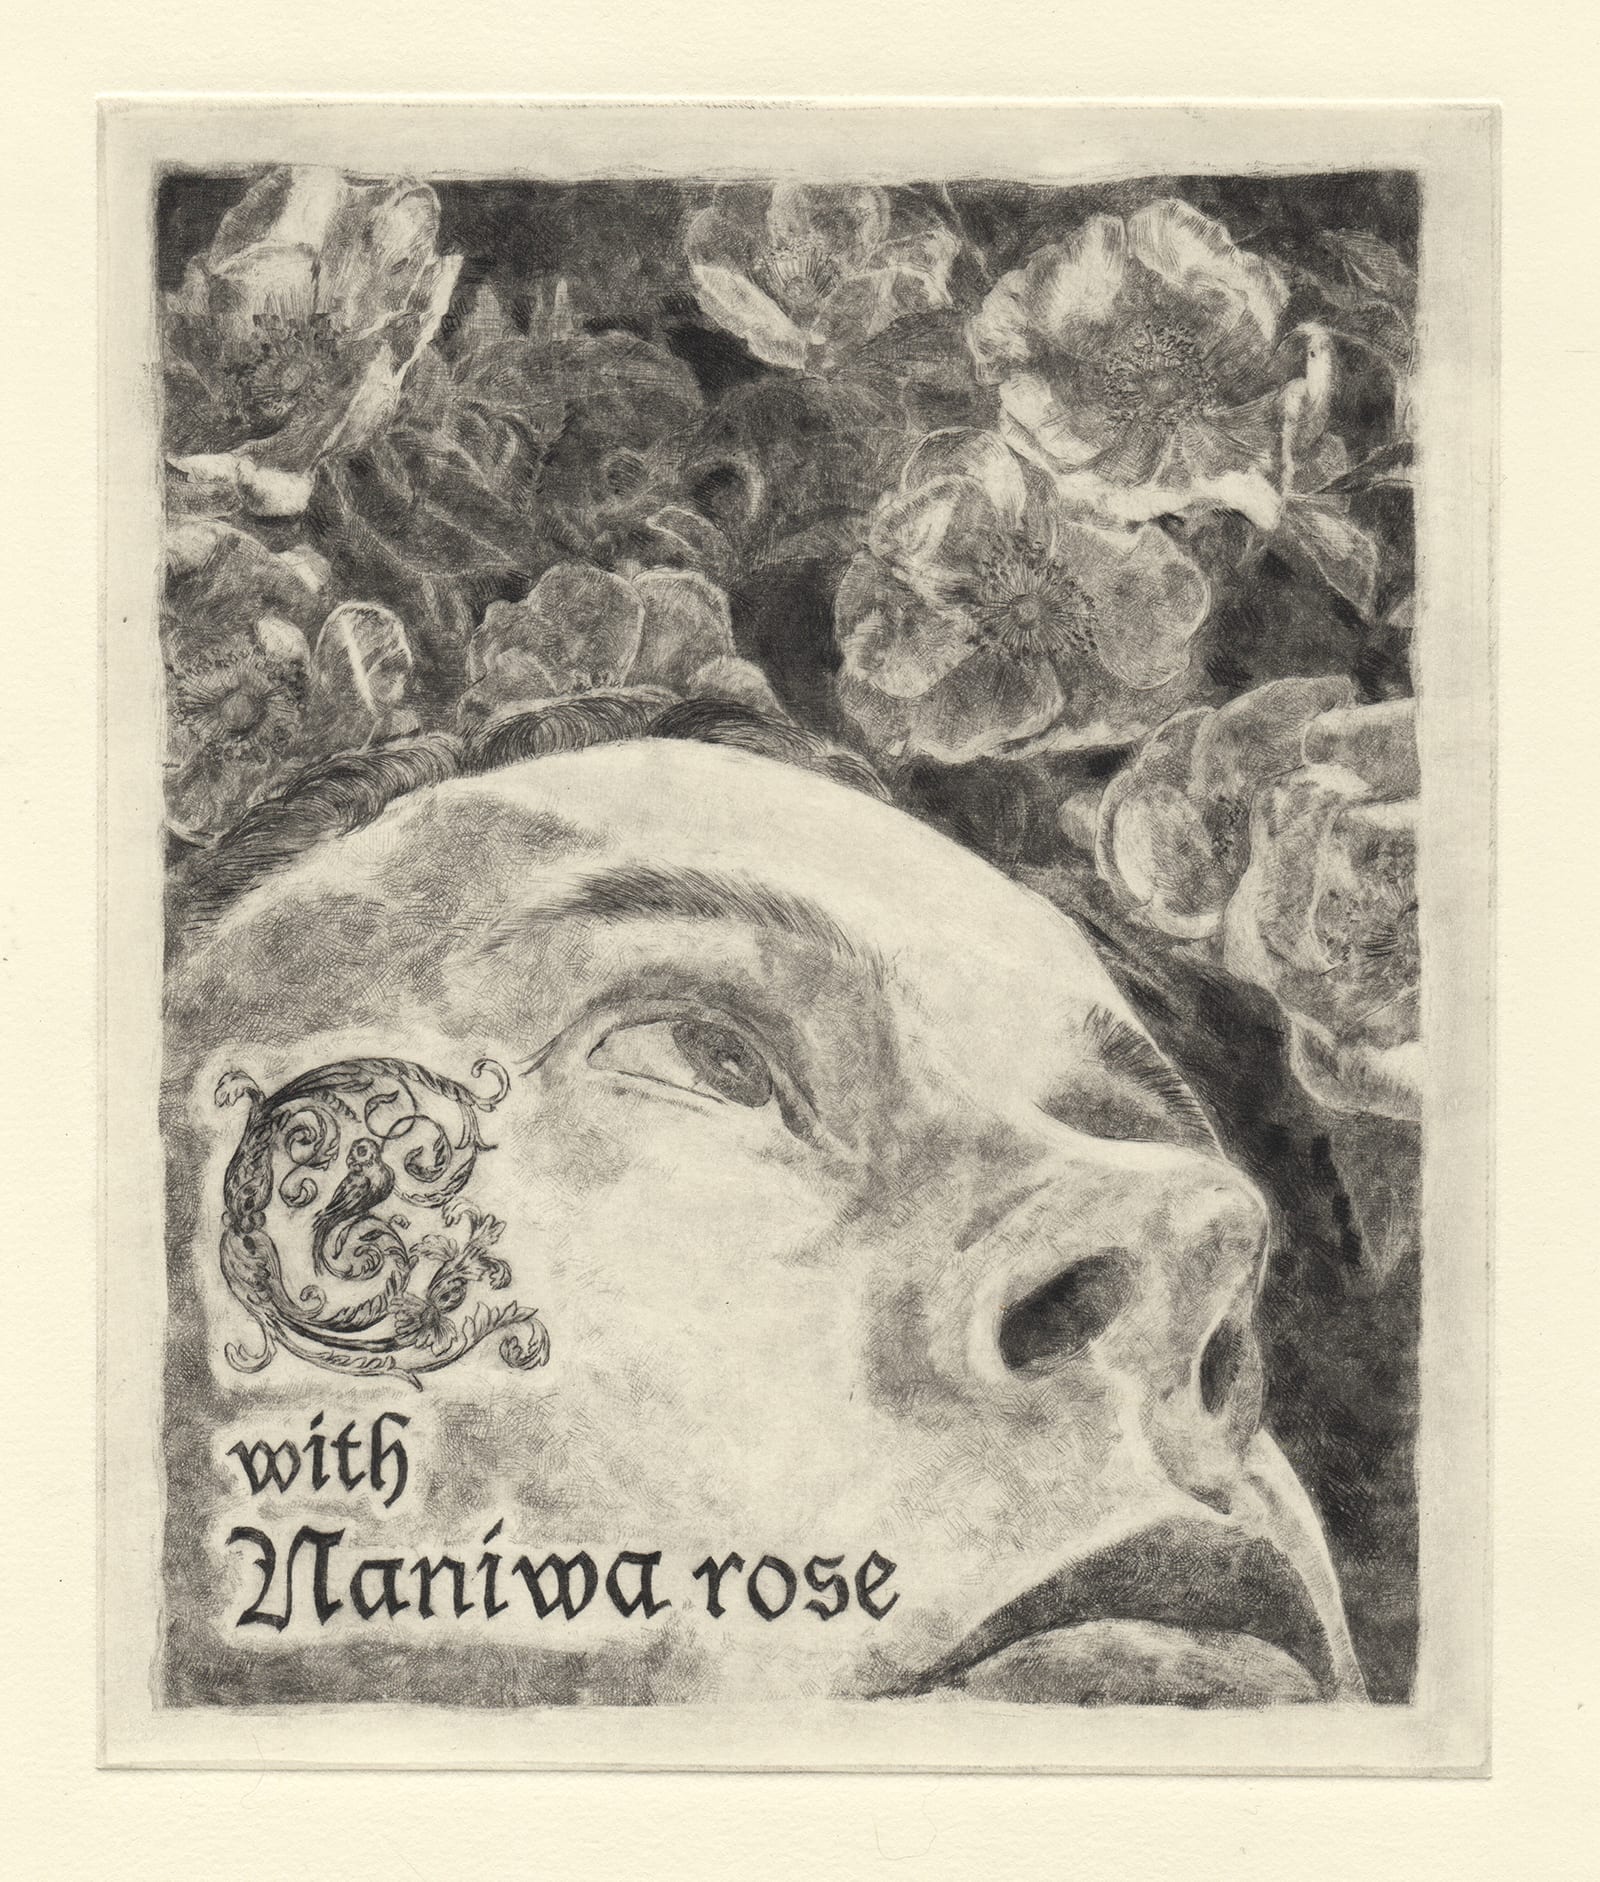 C with Naniwa rose 3 (drypoint etching by Yaemi Shigyo)